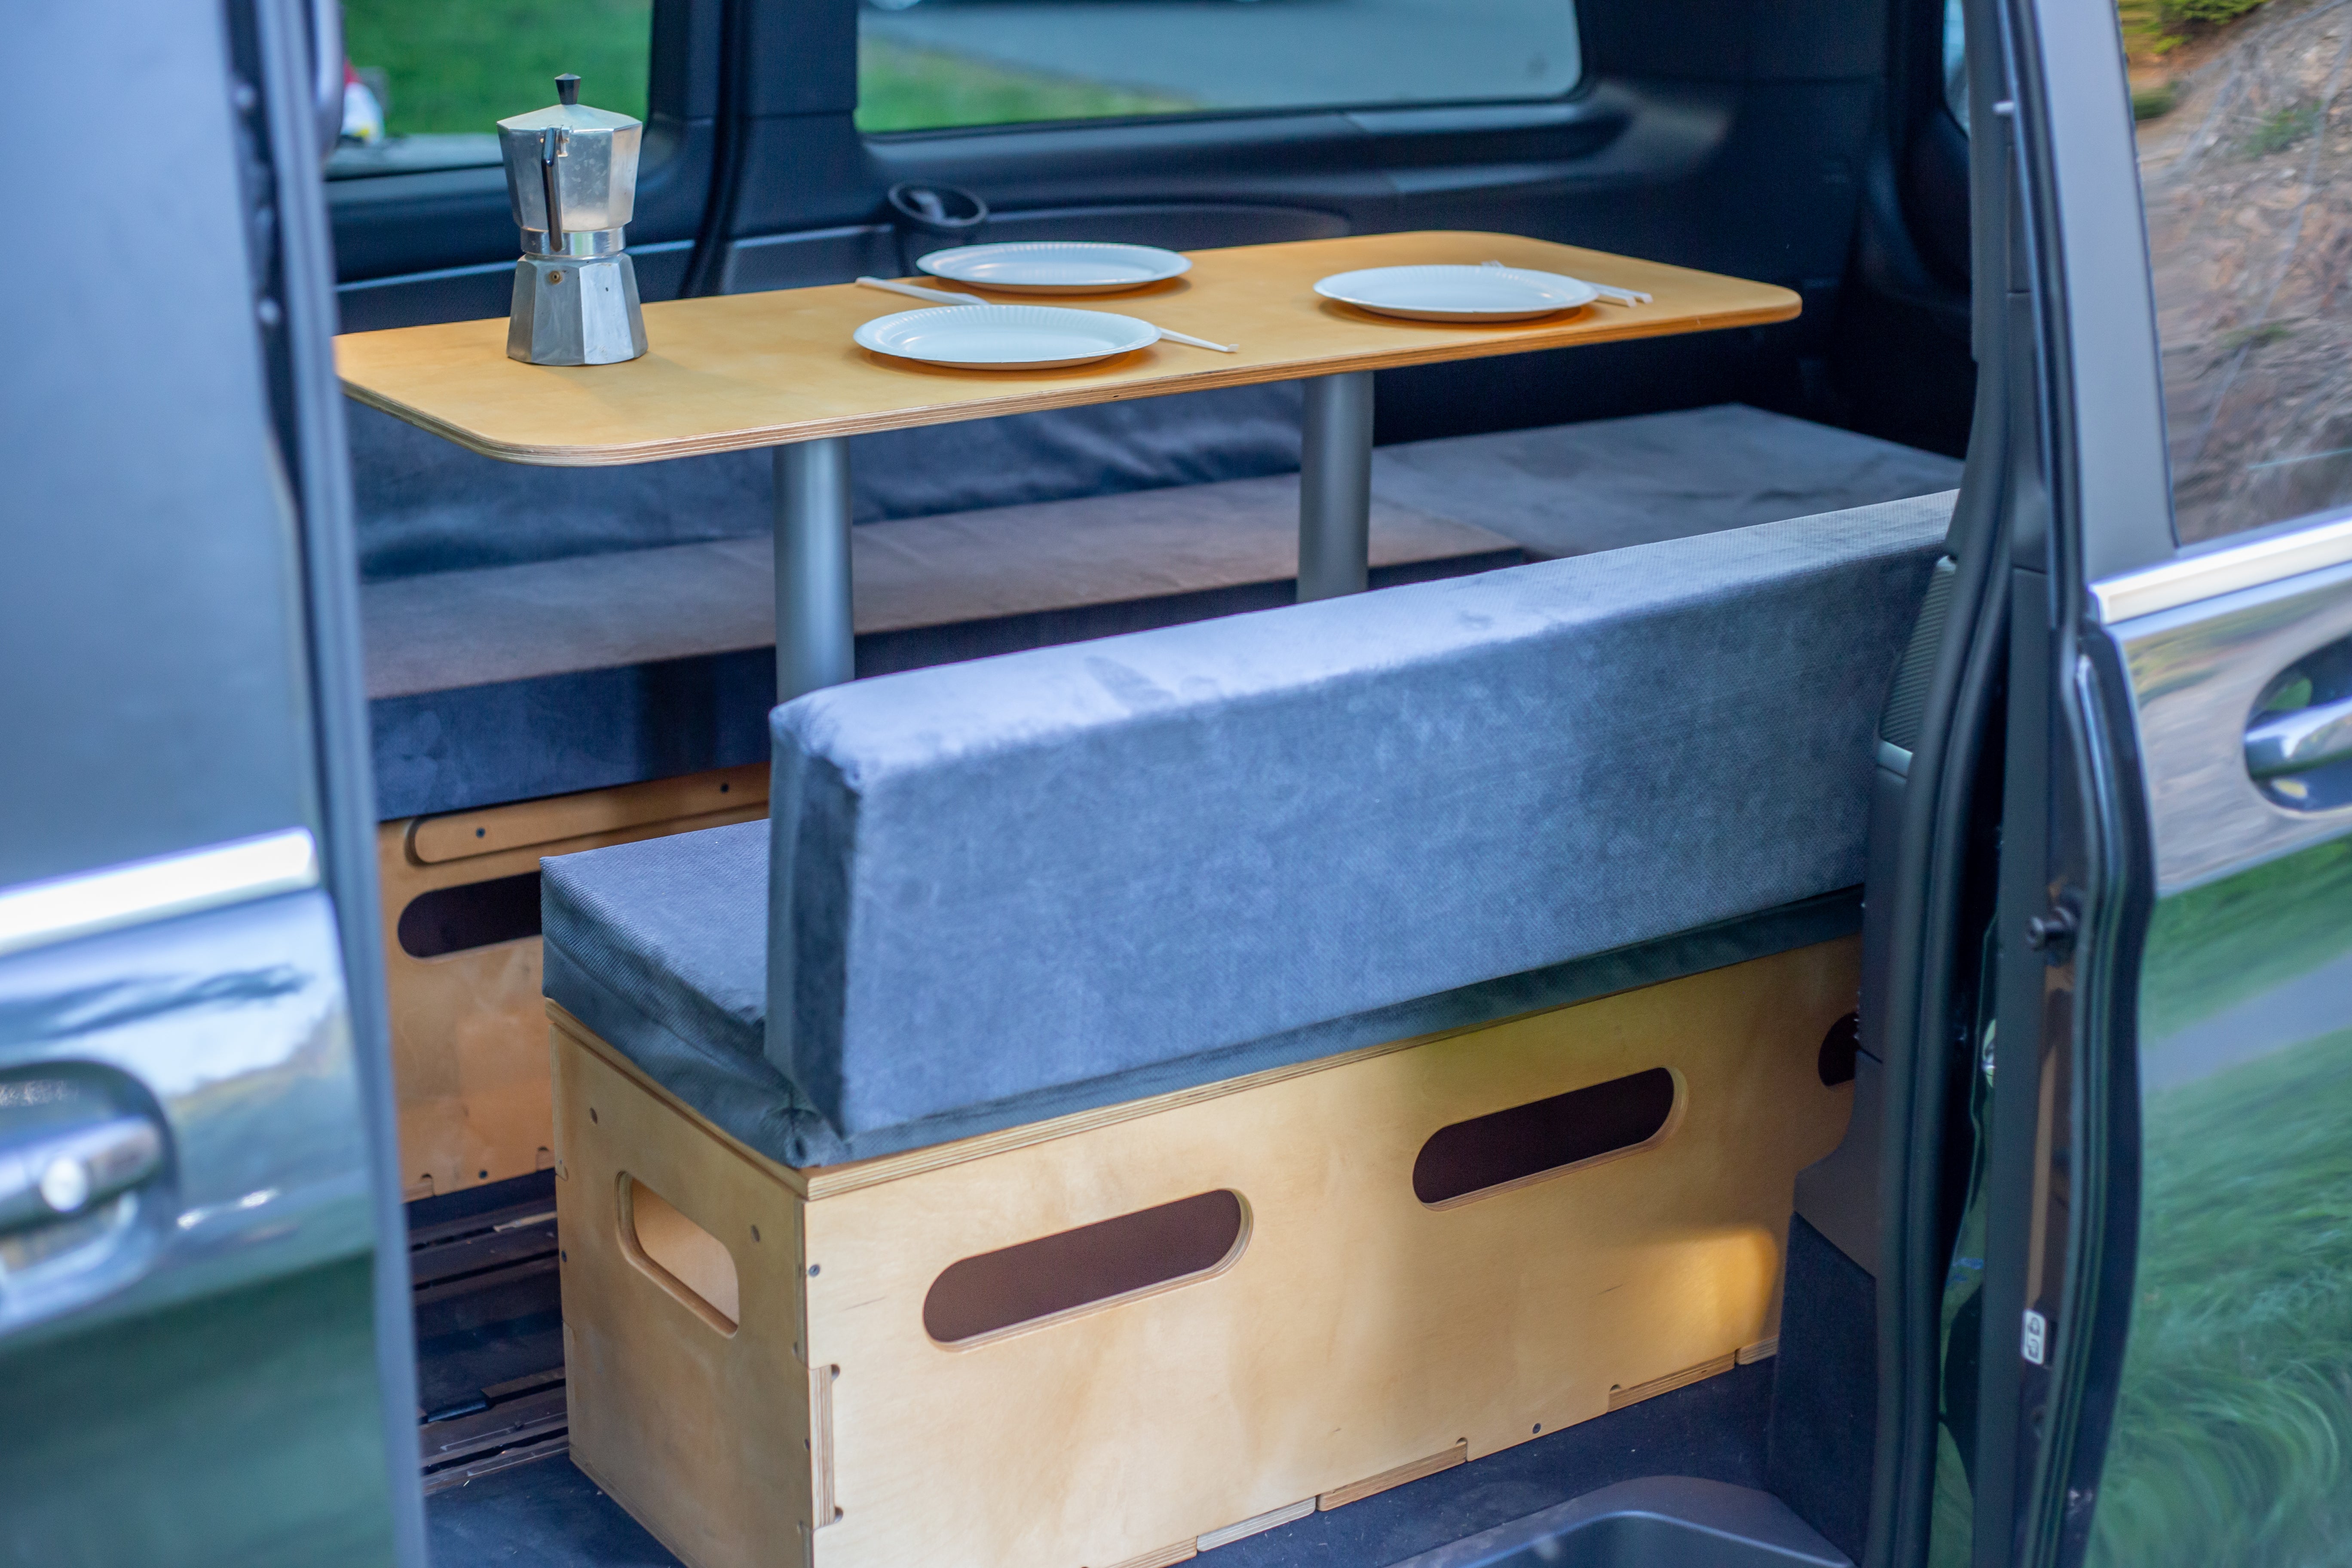 Moonbox Campingbox mit Tisch Van/Bus 119cm Natur